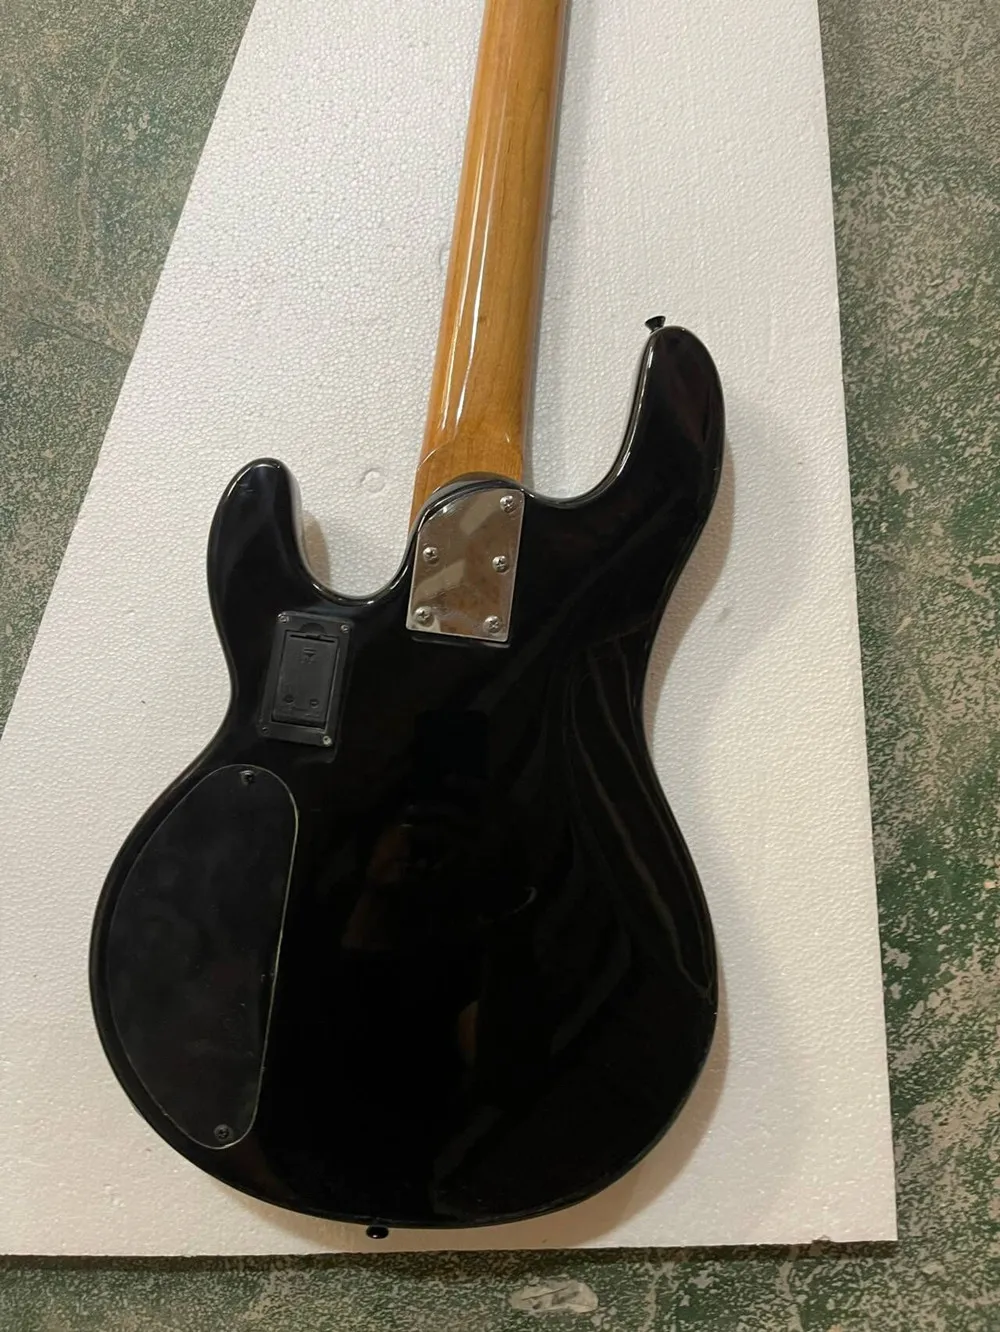 Kavrulmuş akçaağaç boynu, krom donanımlı siyah gövde 4 telli elektrik bas gitar, özelleştirilmiş sunar.